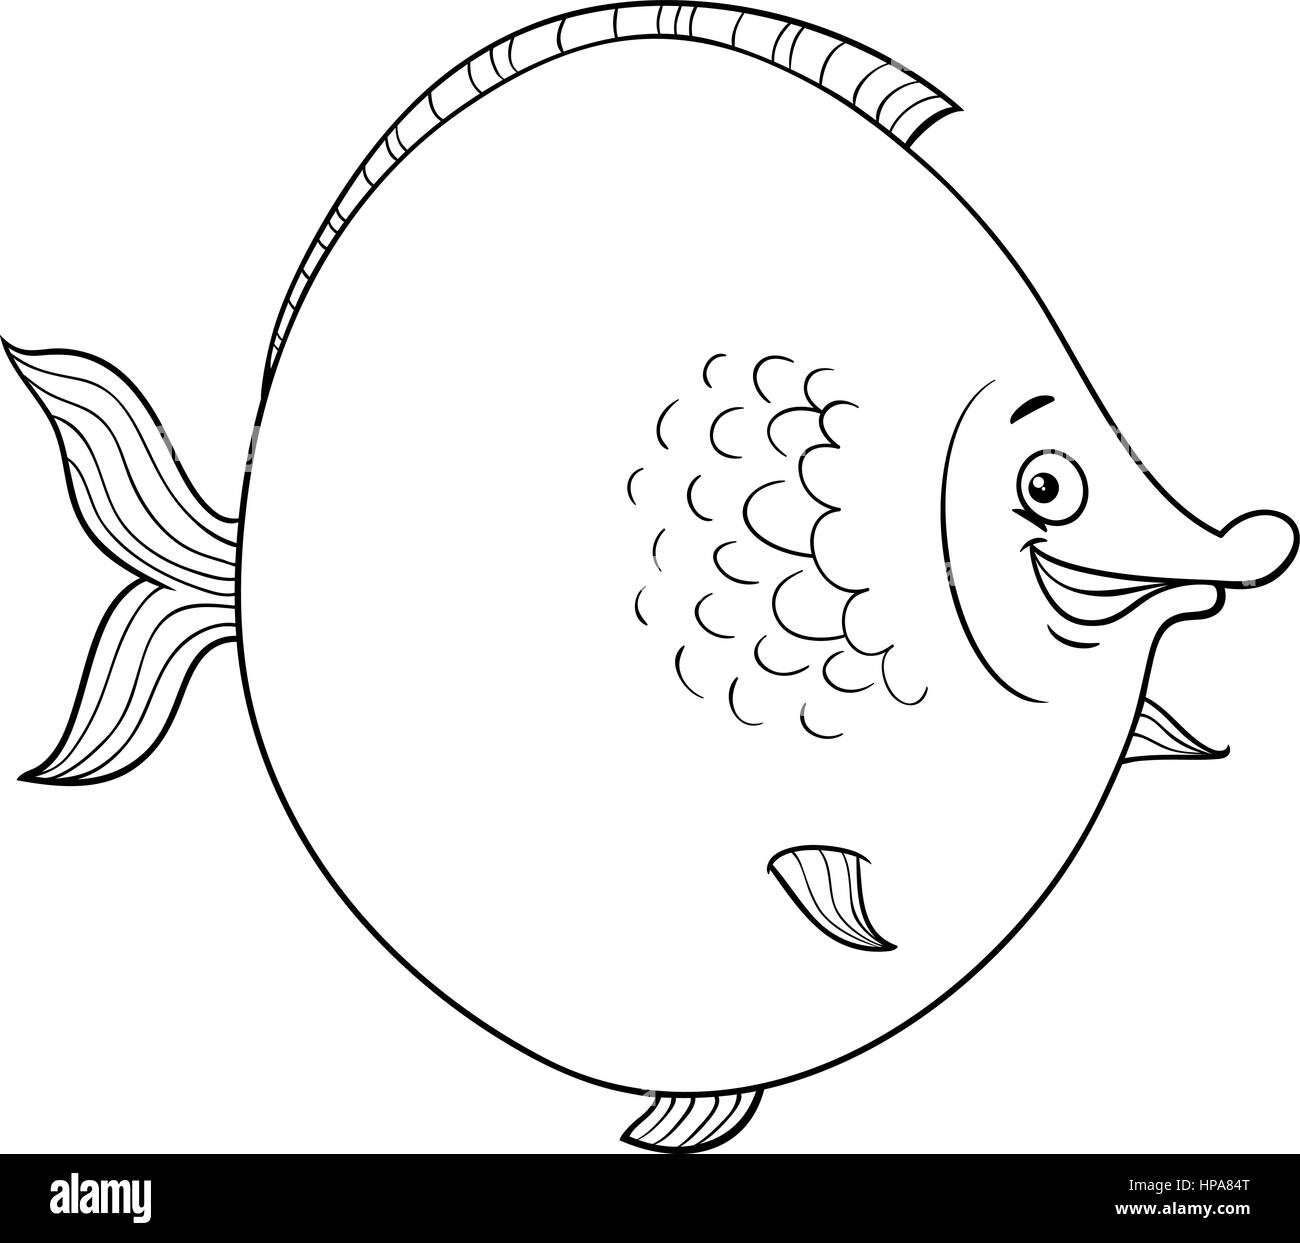 Black and White Cartoon Illustration of Big Fish Sea Life Animal Character Coloring Page Stock Vector